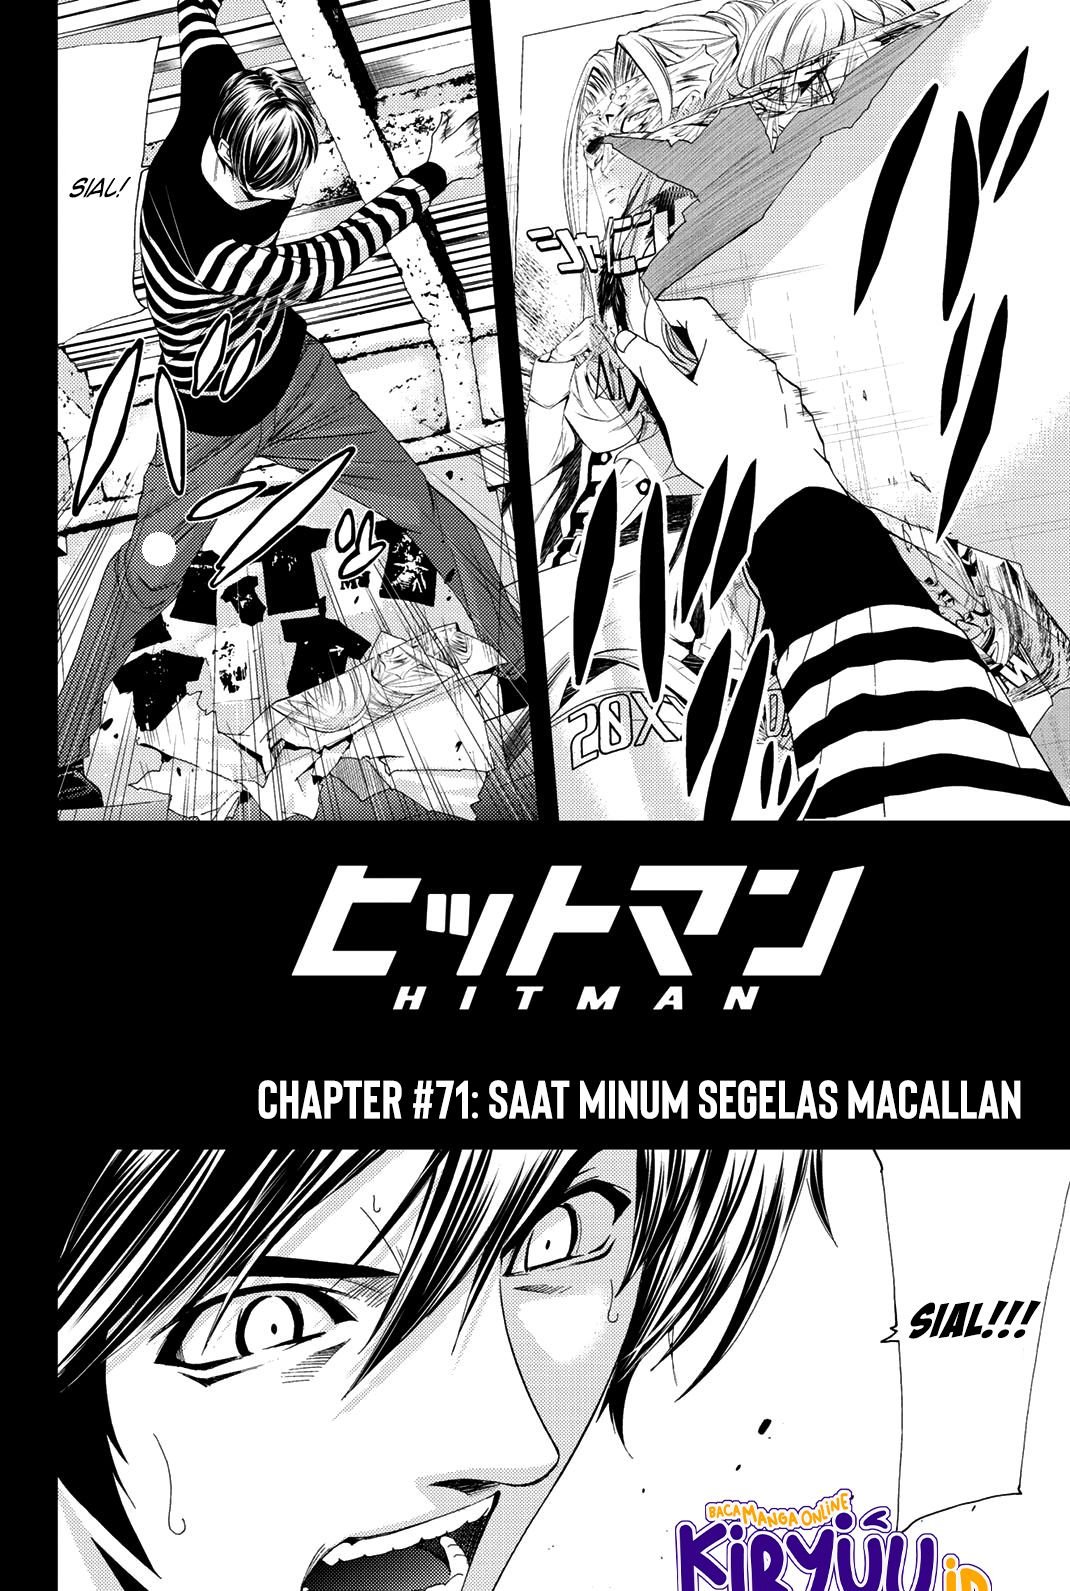 Hitman (SEO Kouji) Chapter 71